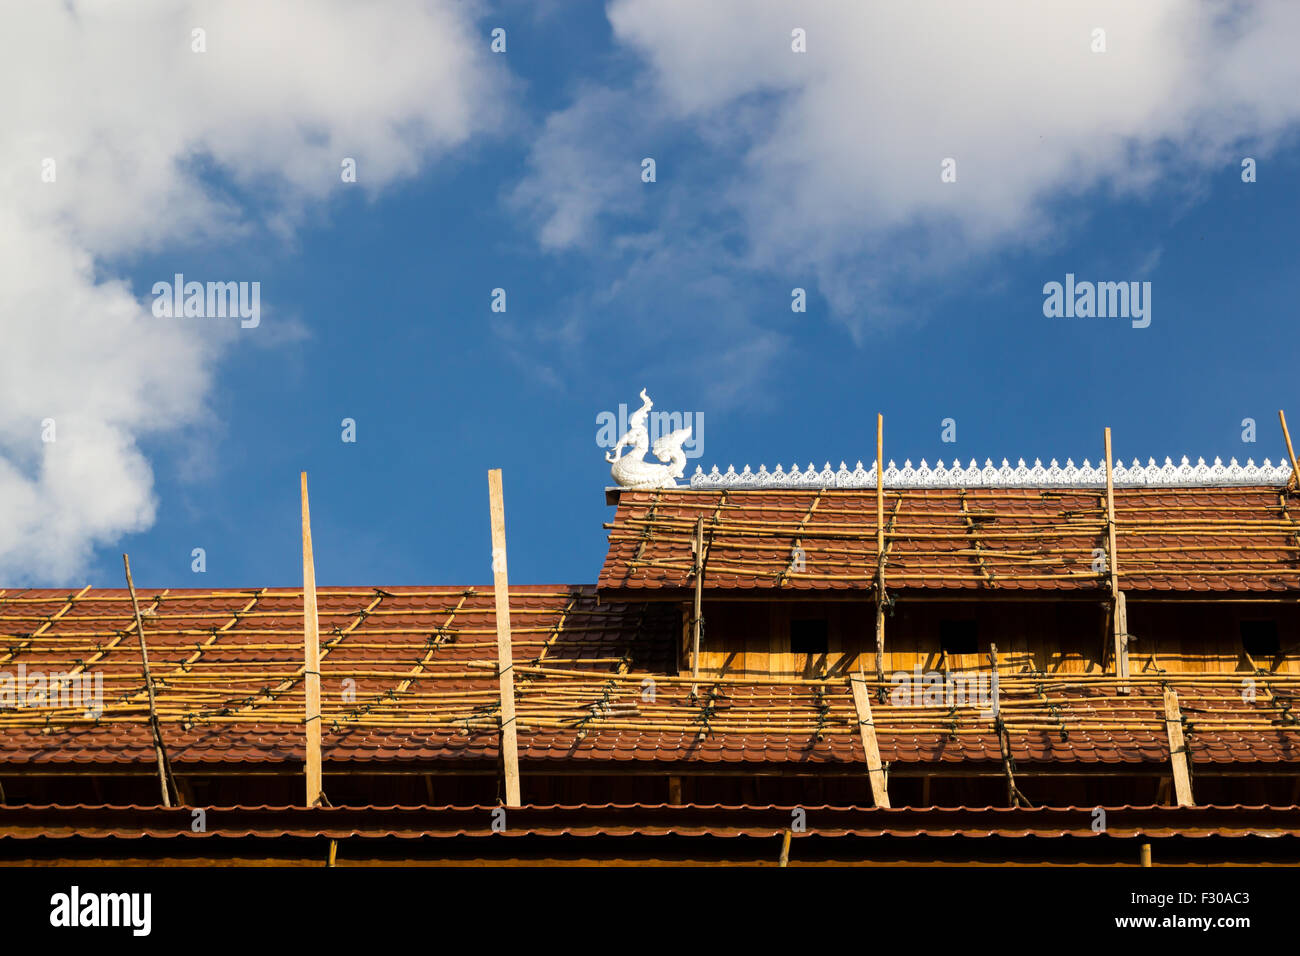 Thai Tempel Dach zu Myanmar im Bau Stockfoto